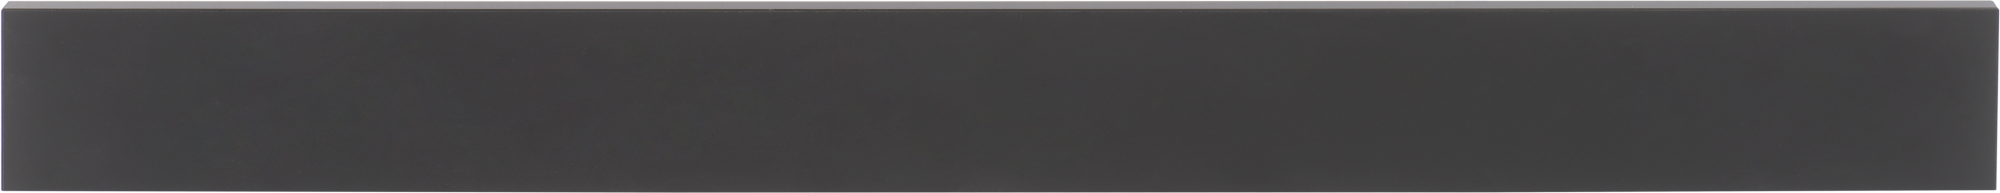 Regleta angular delinia id mikonos gris 9x76,8 cm